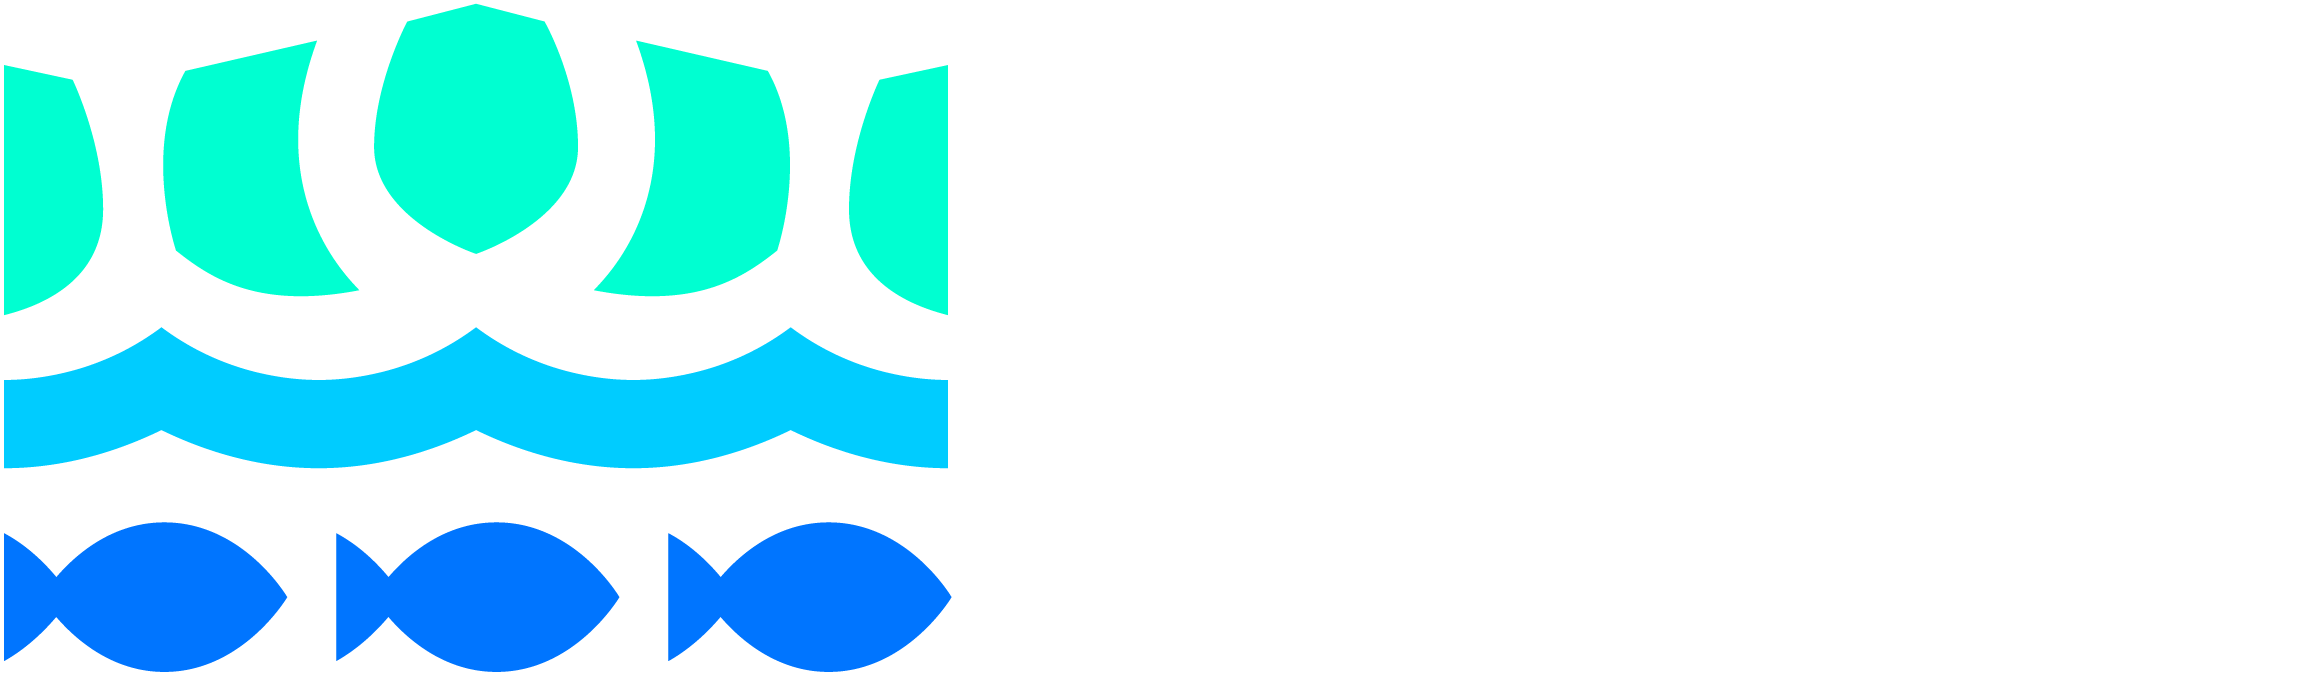 Plymouth Sound National Marine Park Logo